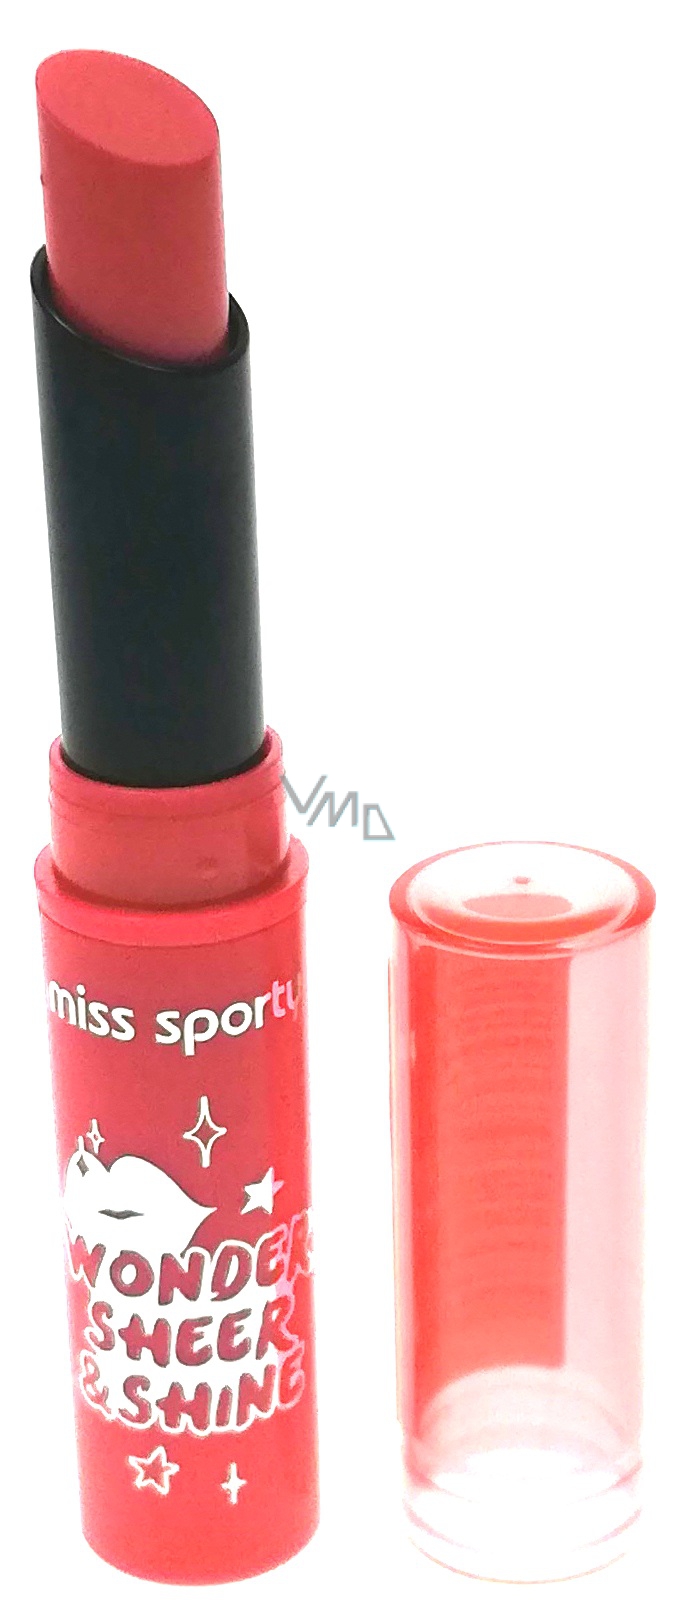 Miss Sporty Wonder Sheer Shine Lipstick Rtenka 300 Almost Coral 1 G Vmd Drogerie A Parfumerie